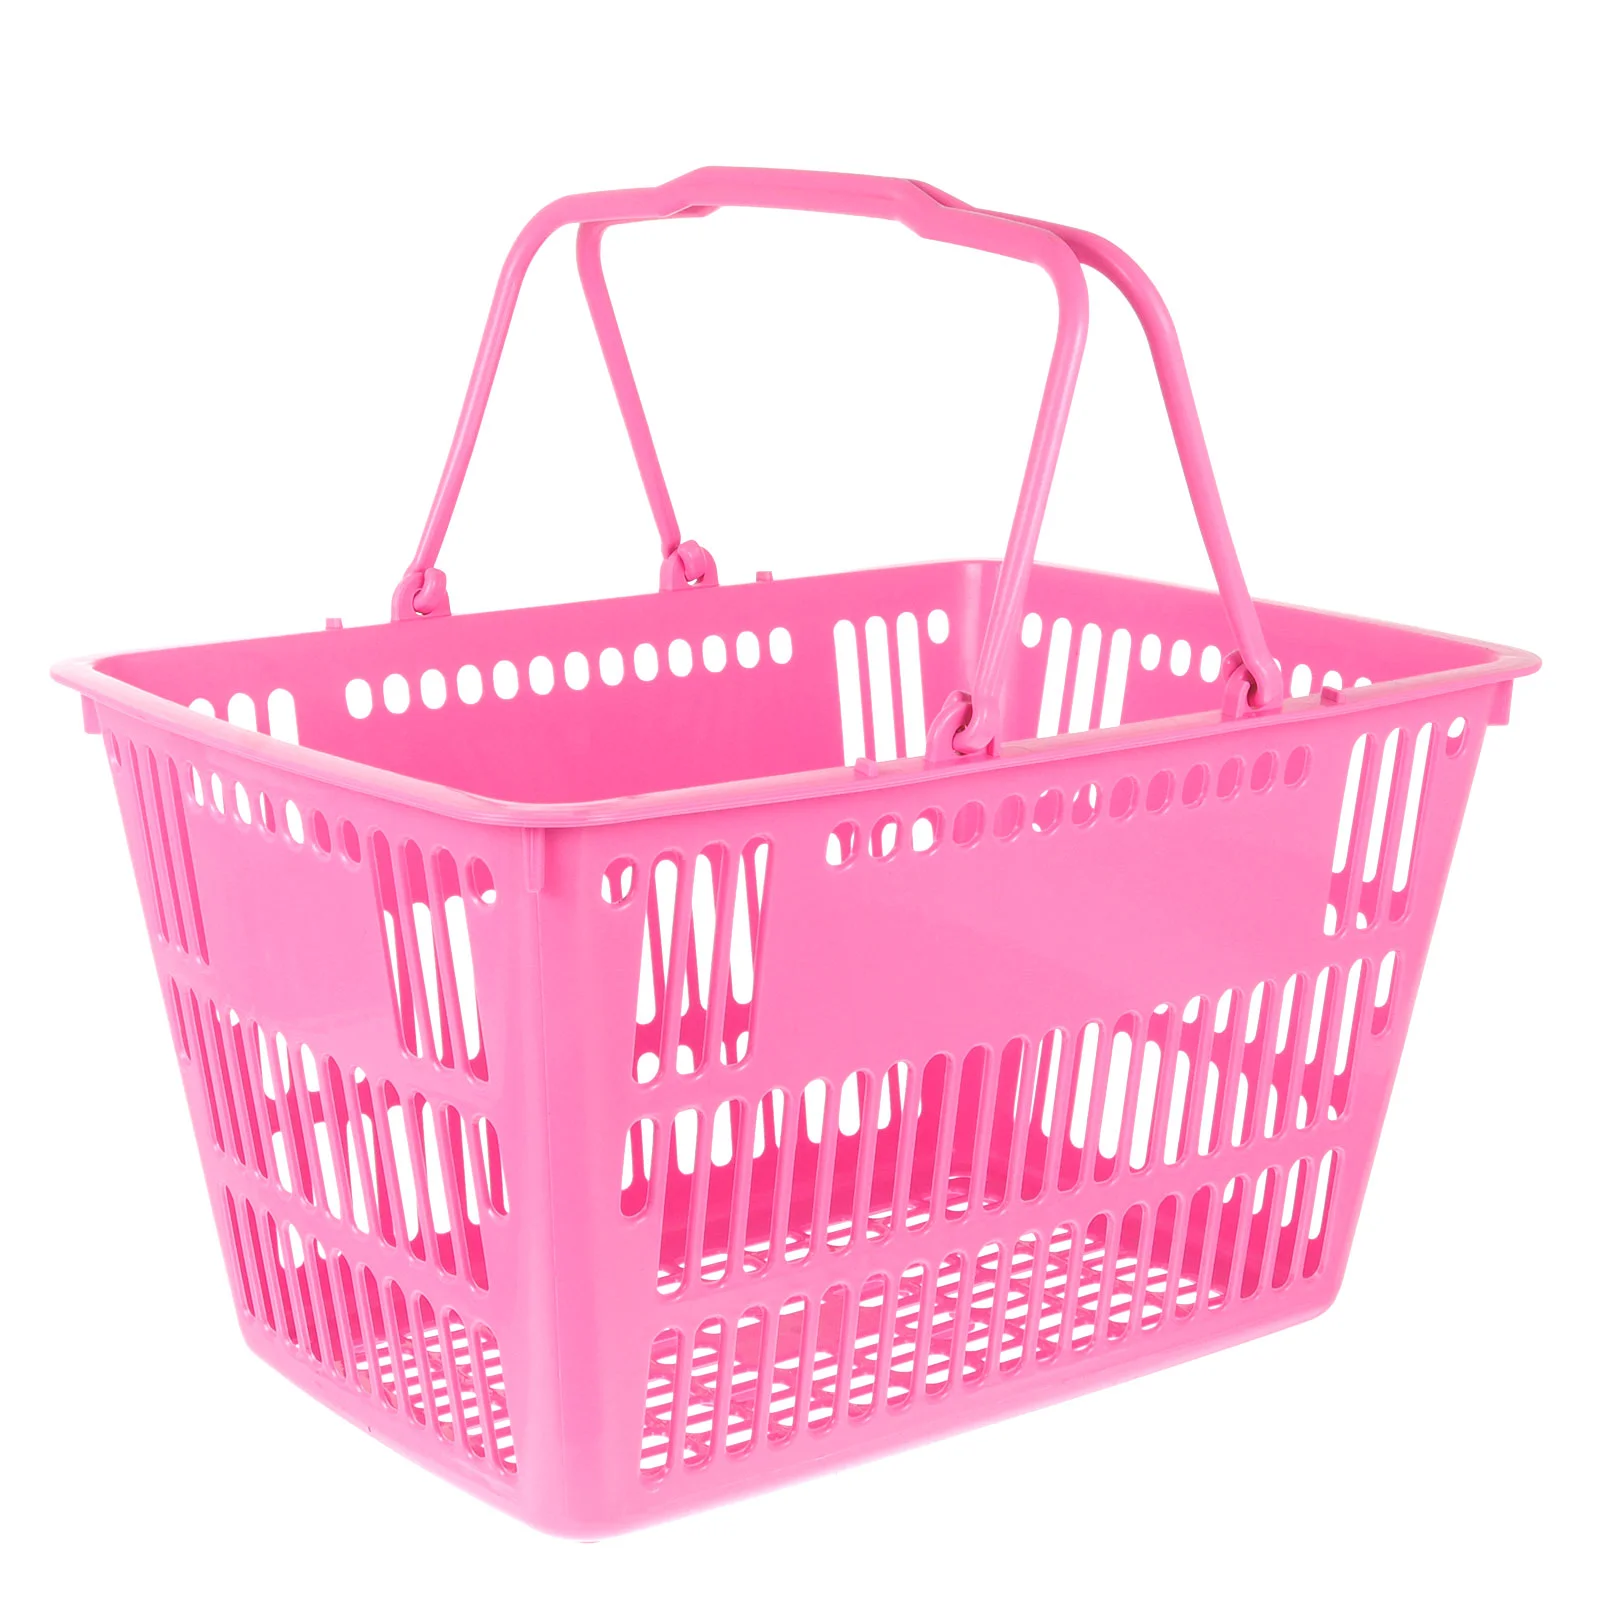 

Basket Shopping Baskets Storage Grocery Handles Kids Mall Organizing Cart Retail Supermarket Store Sundries Vegetable Carts Mini